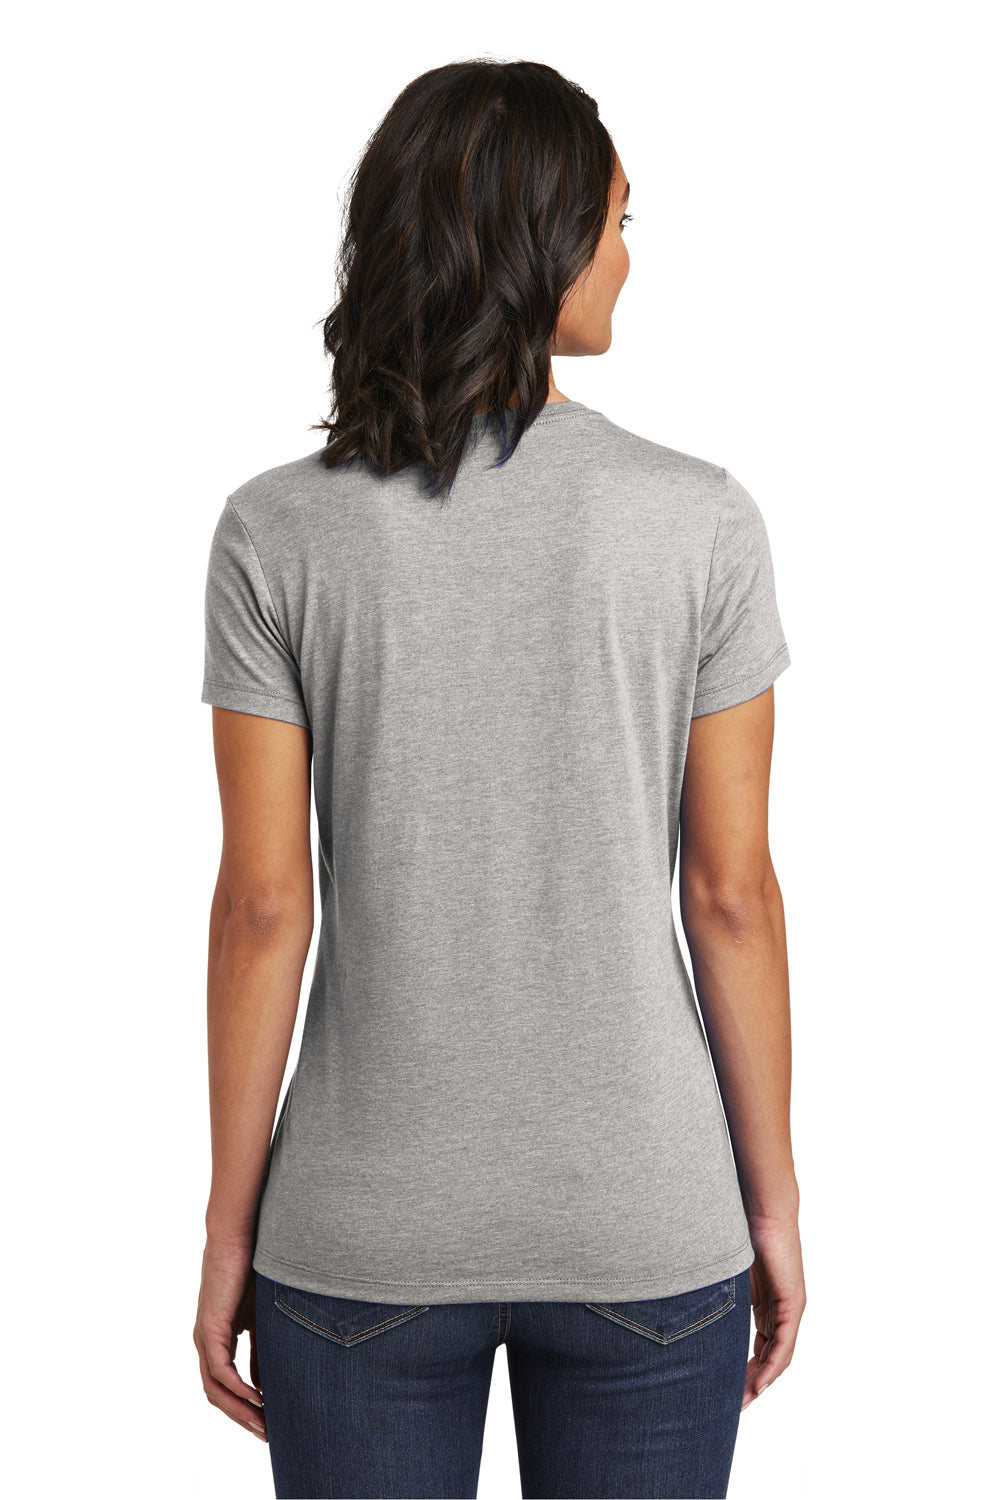 District DT6002 Womens Very Important Short Sleeve Crewneck T-Shirt Heather Light Grey Back